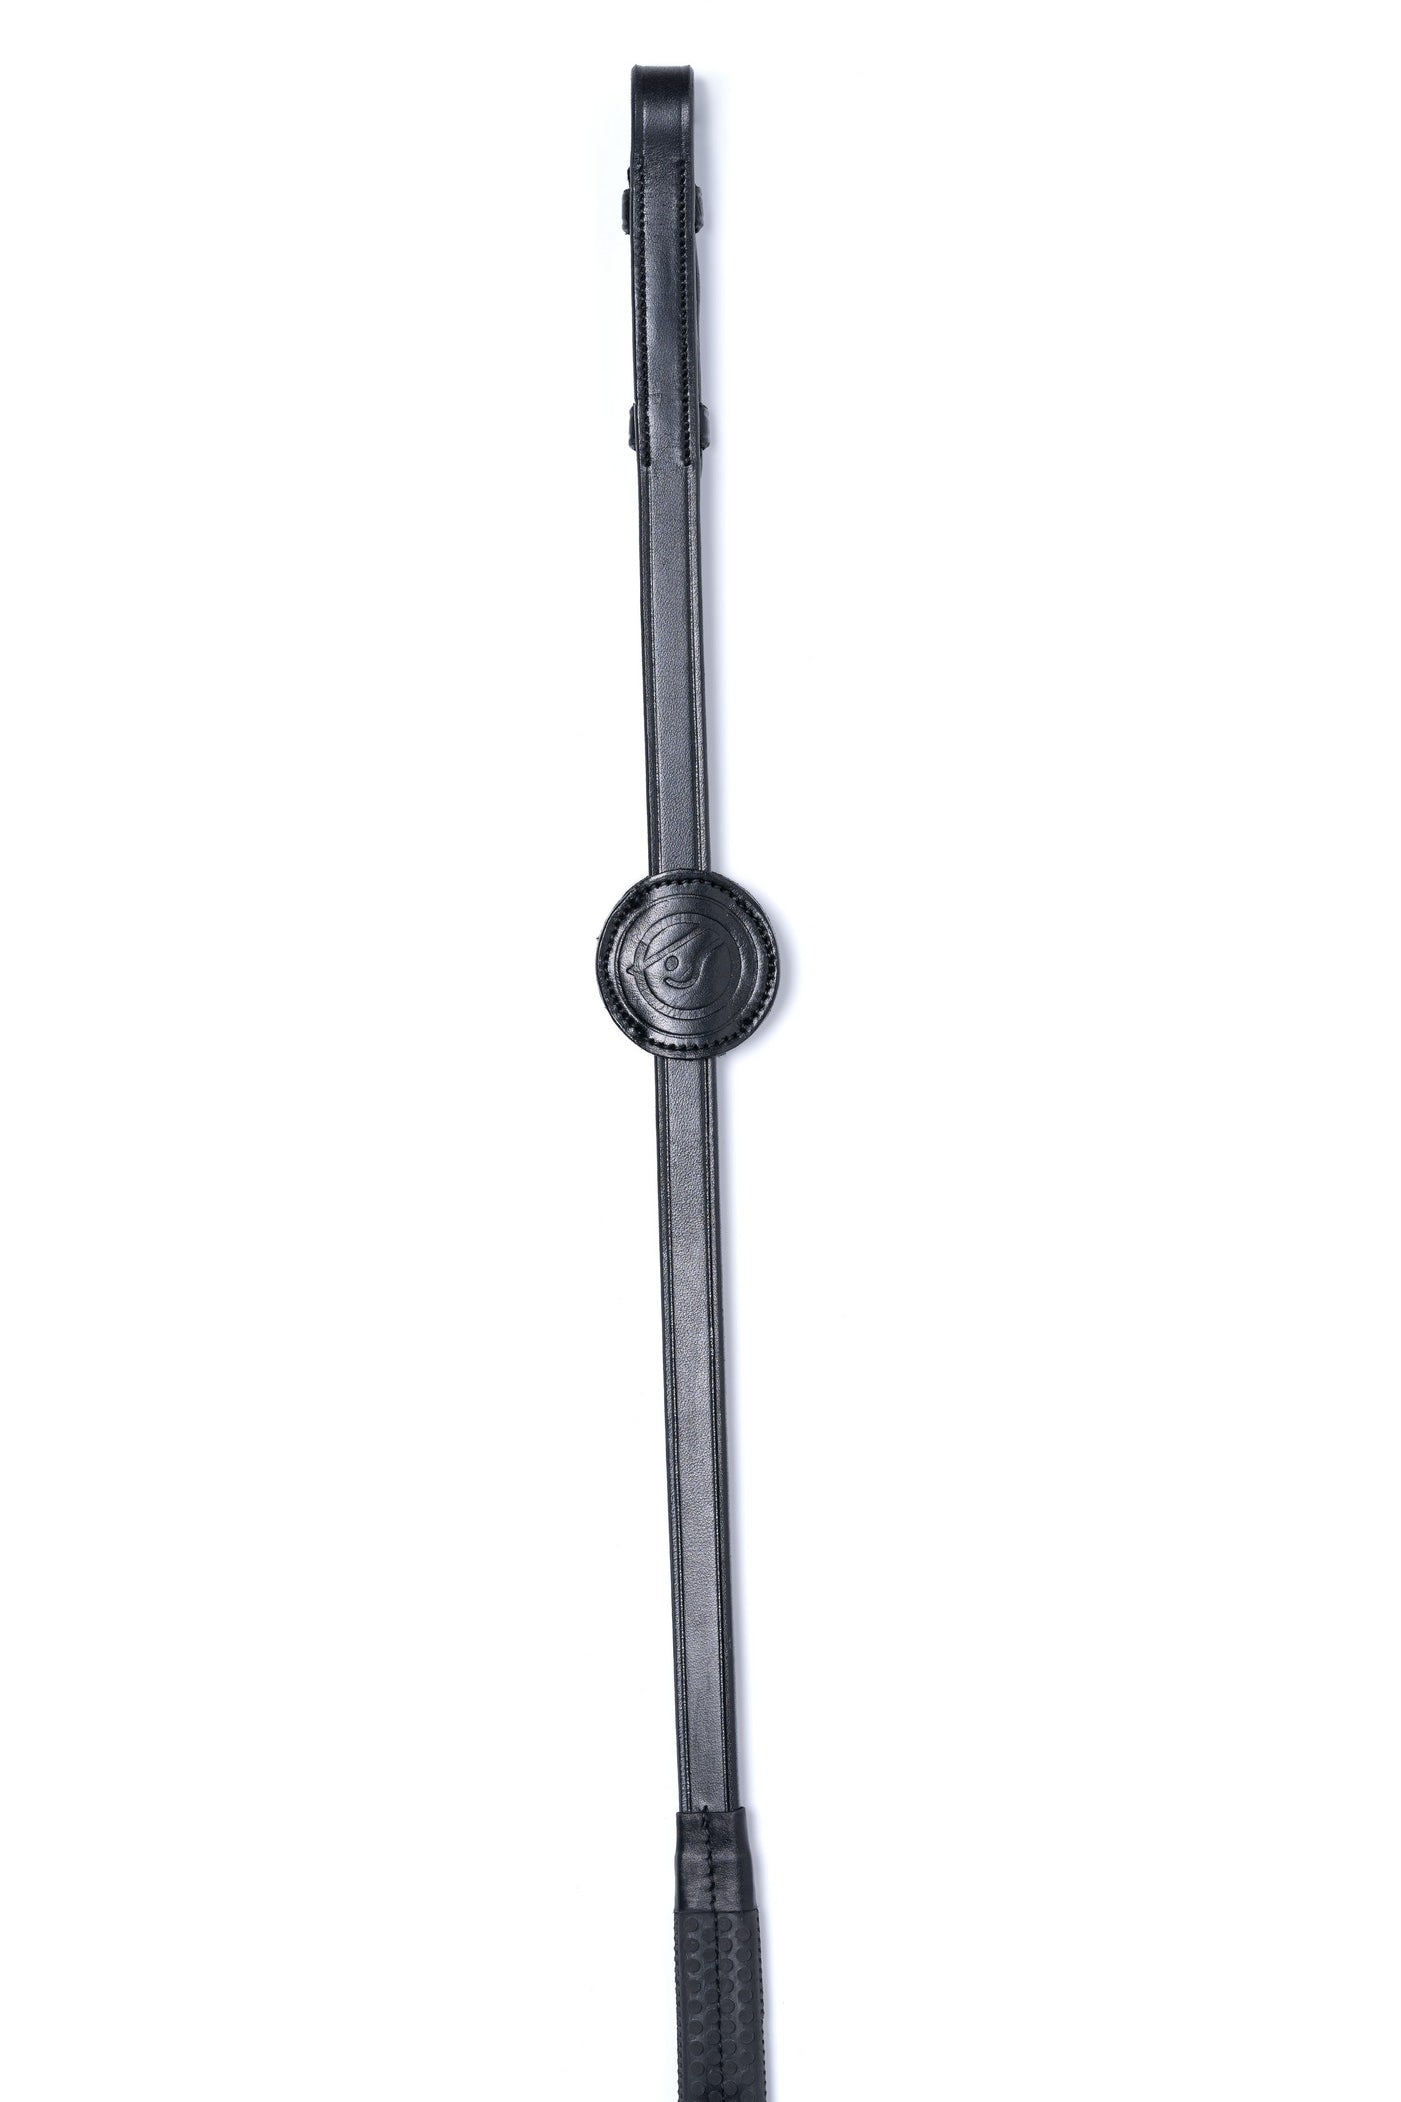 TRUST Fontainebleau rubber reins (16mm) silver buckles Black